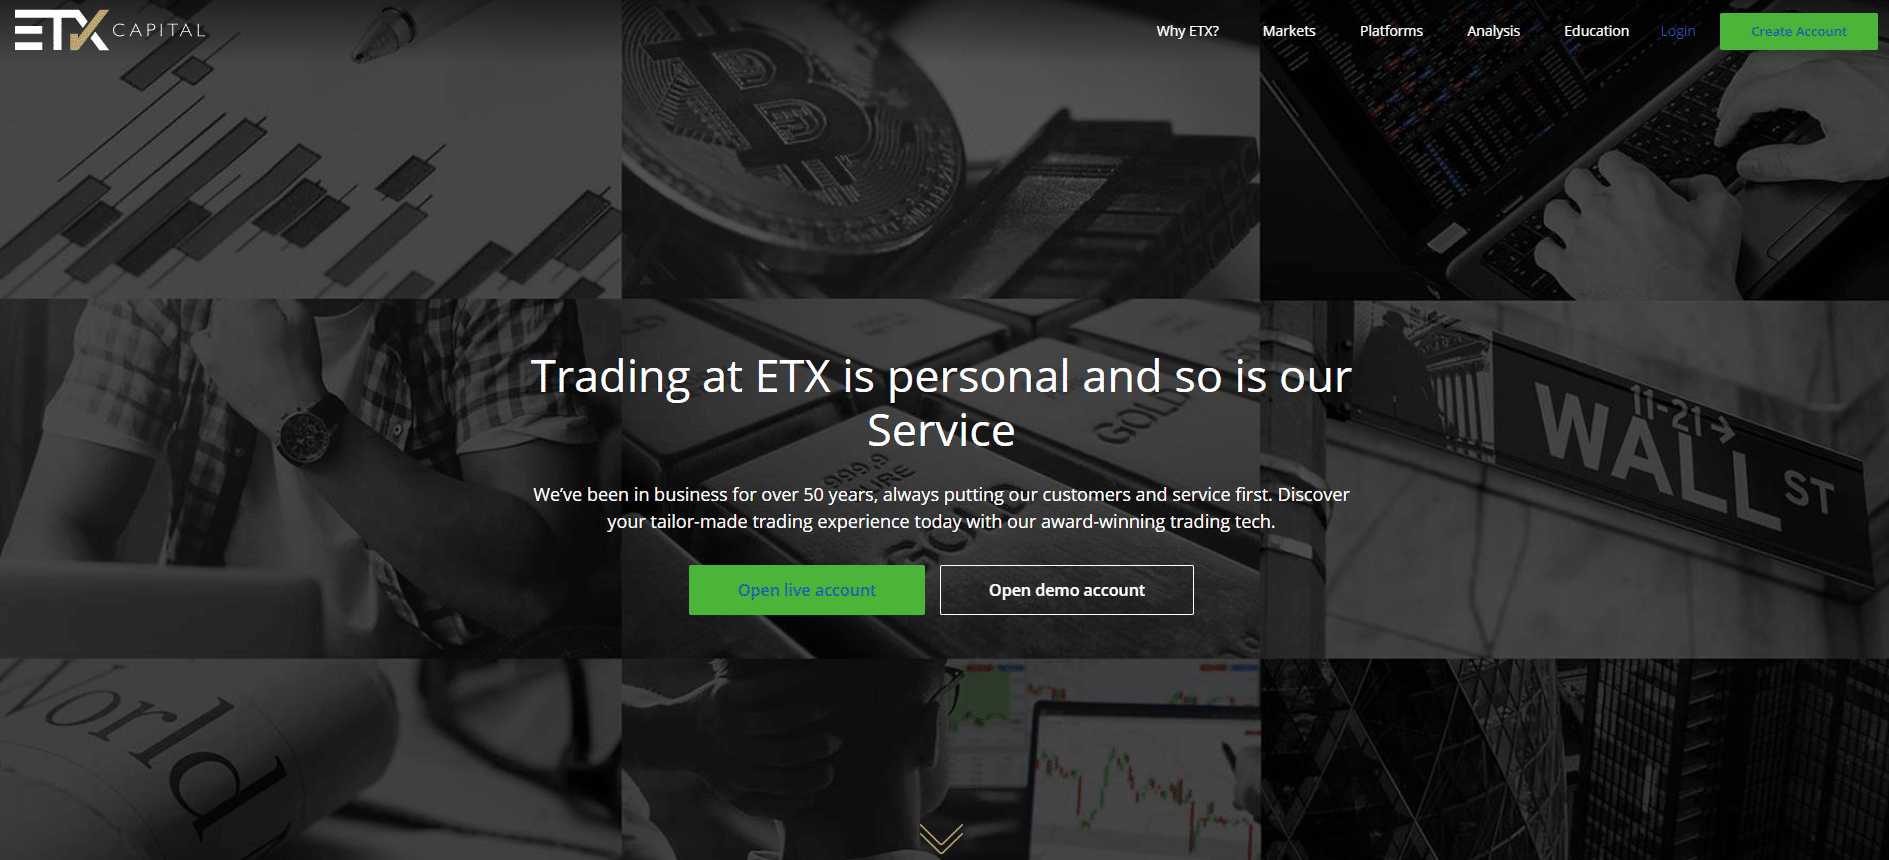 ETX Capital आधिकारिक वेबसाइट